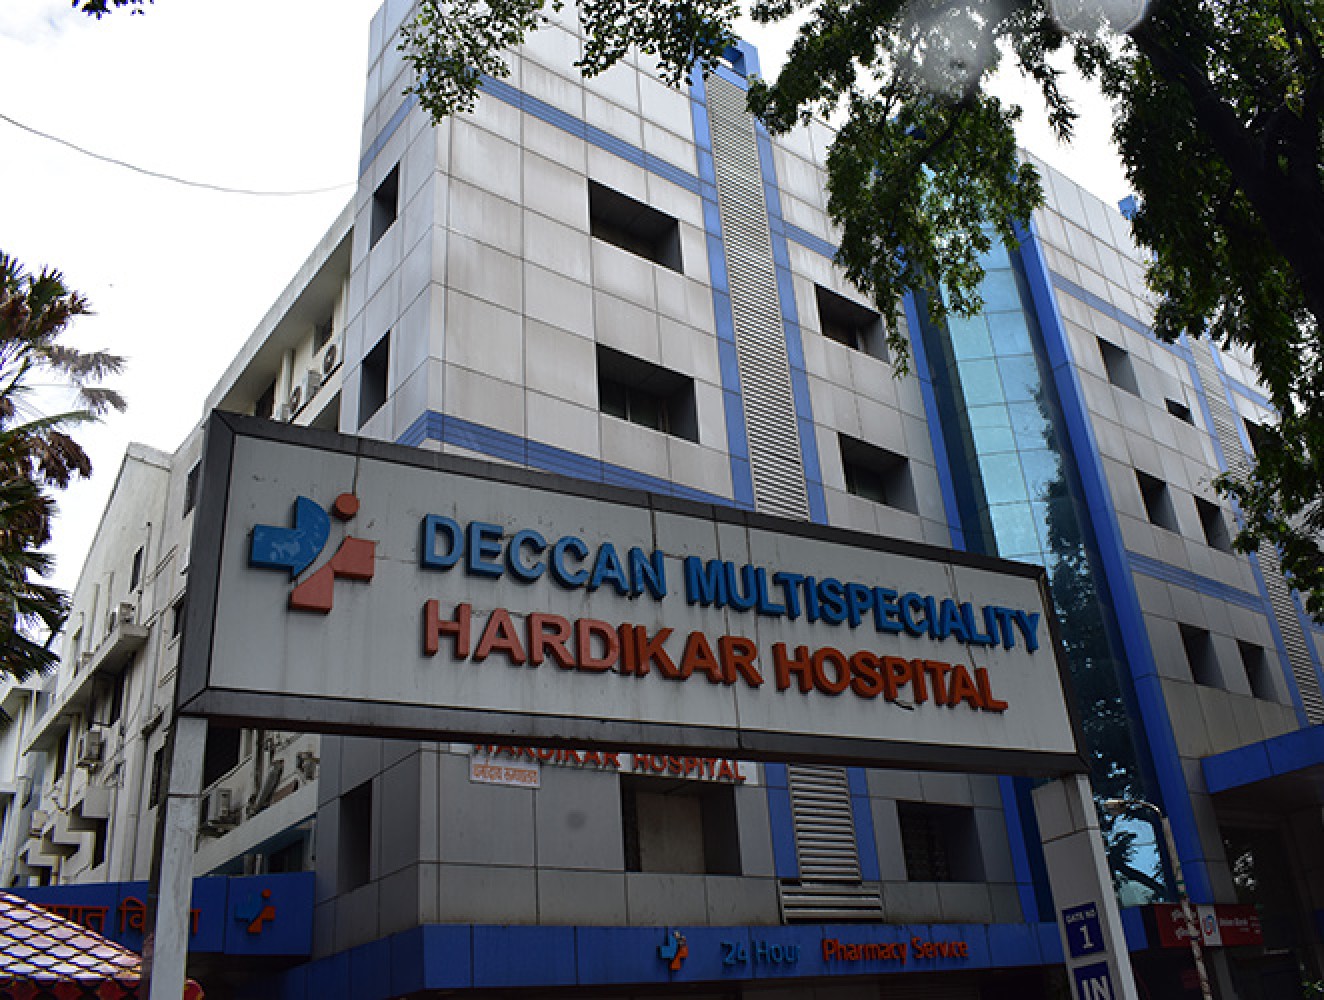 Deccan Hardikar Hospital - Sushrut Medical Care And Research Society